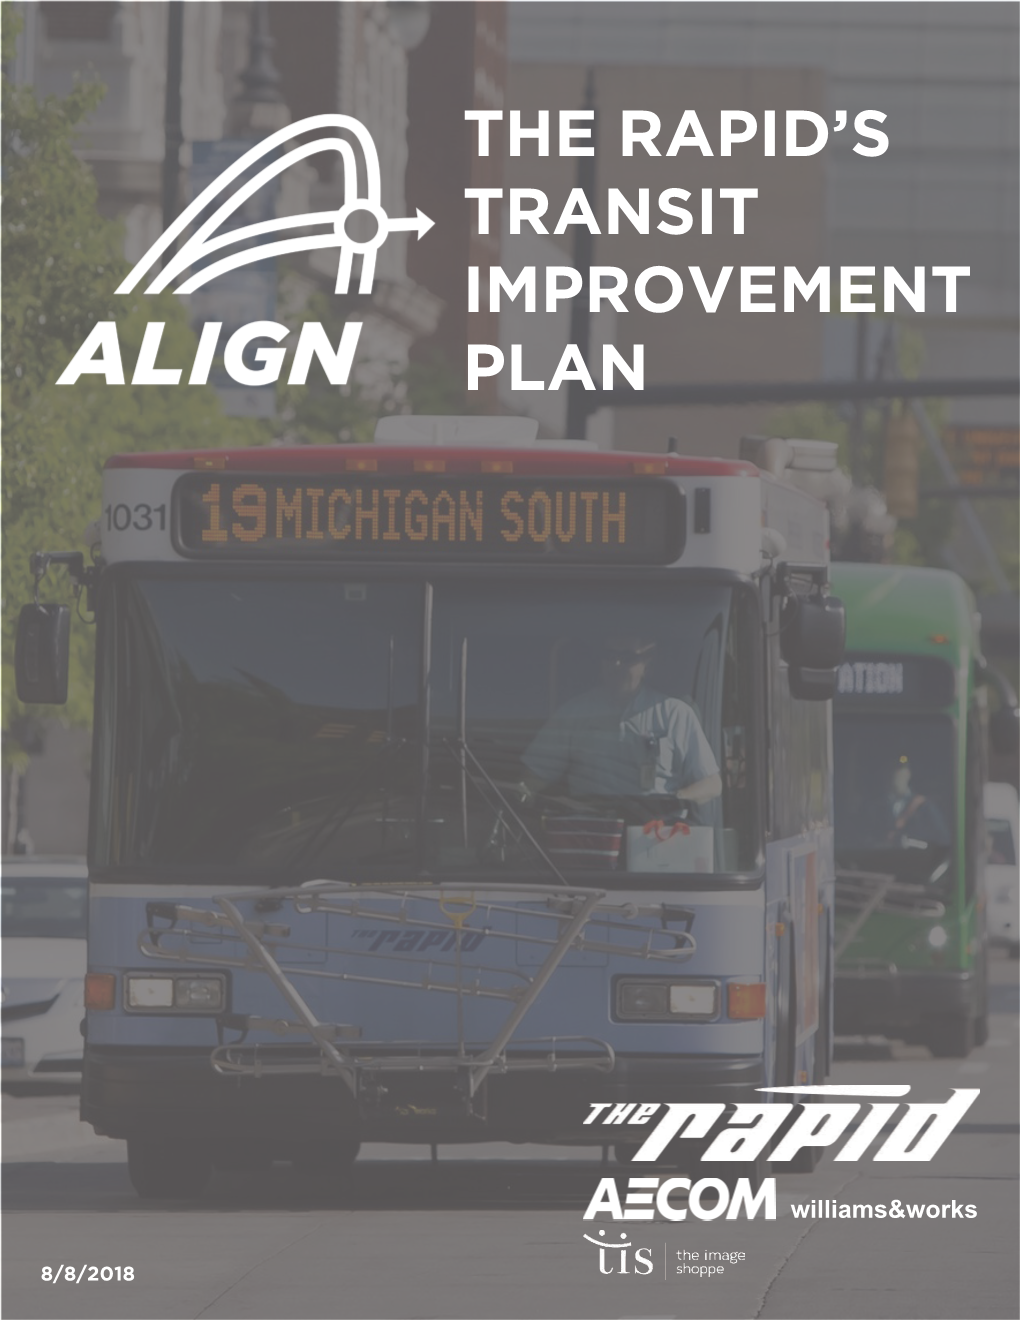 Align Transit Improvement Plan